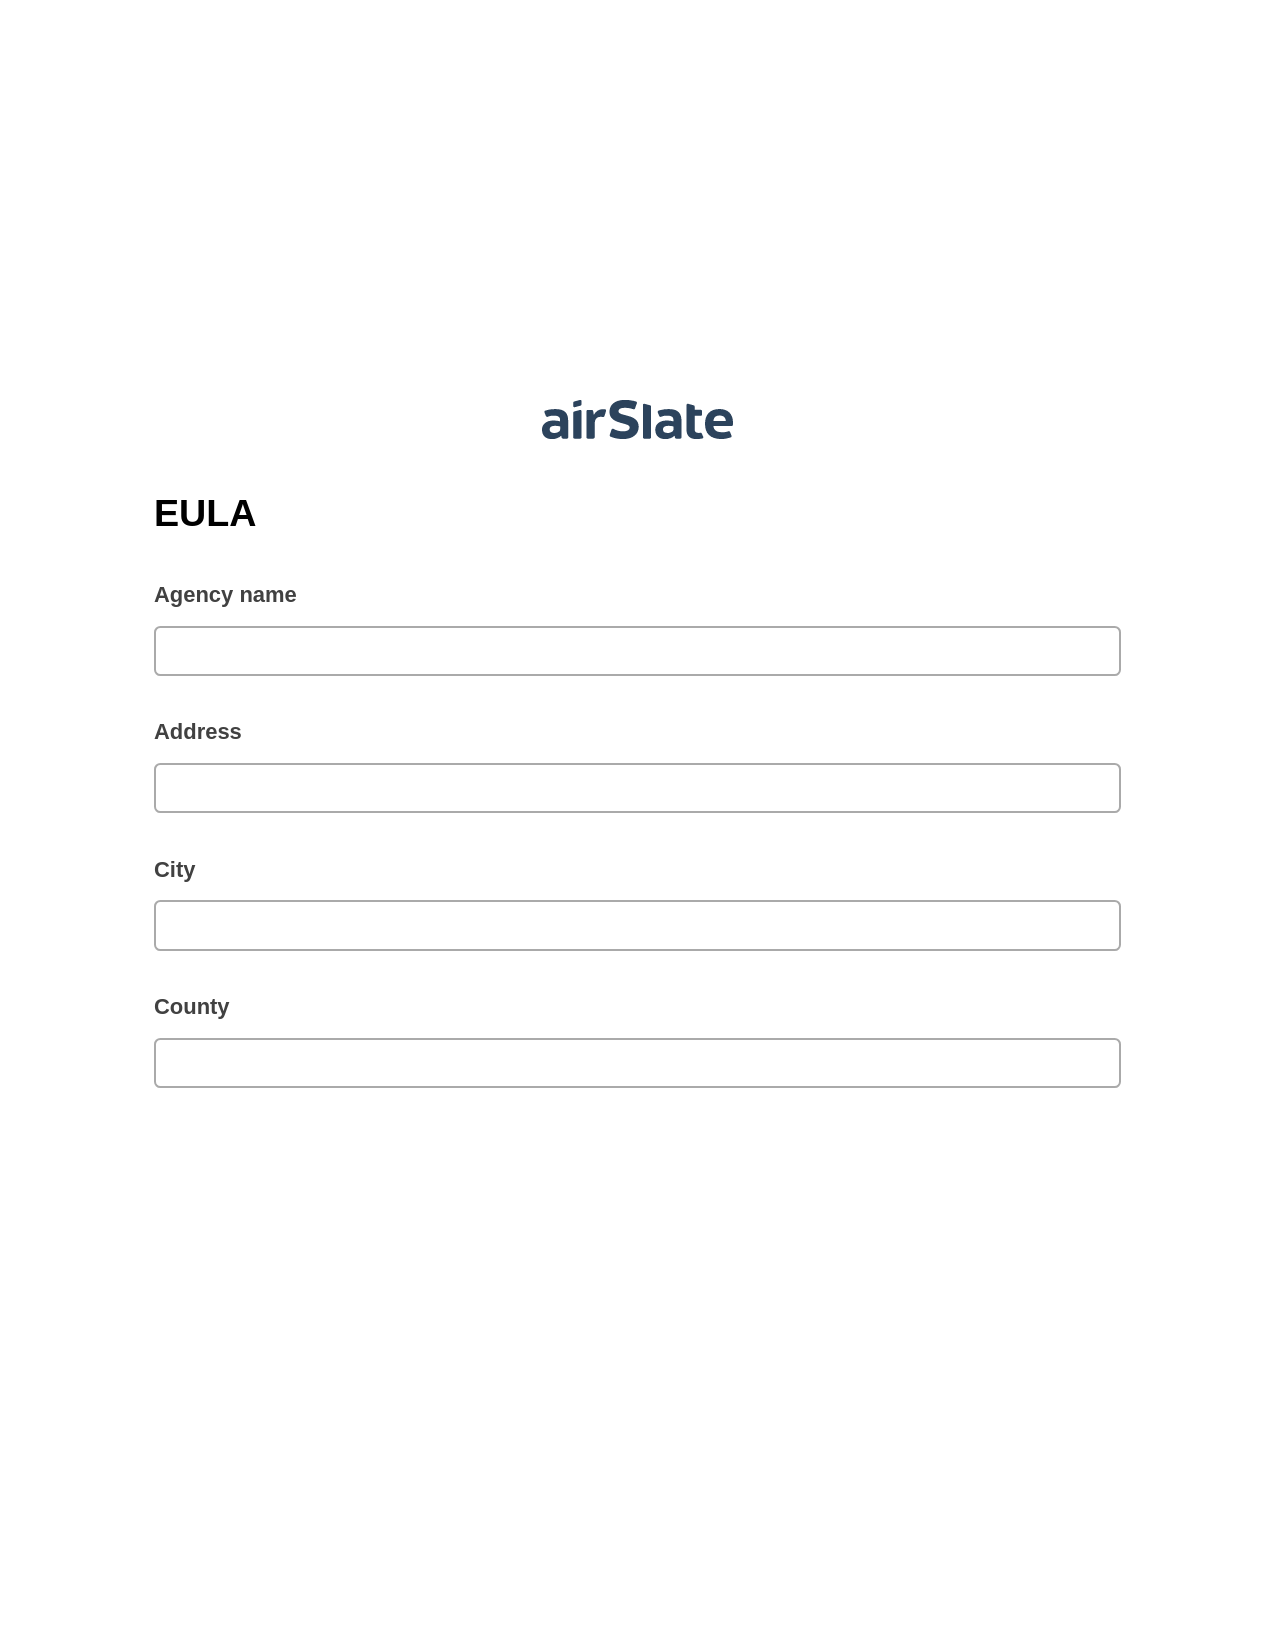 EULA Pre-fill from Google Sheets Bot, Webhook Bot, Webhook Postfinish Bot